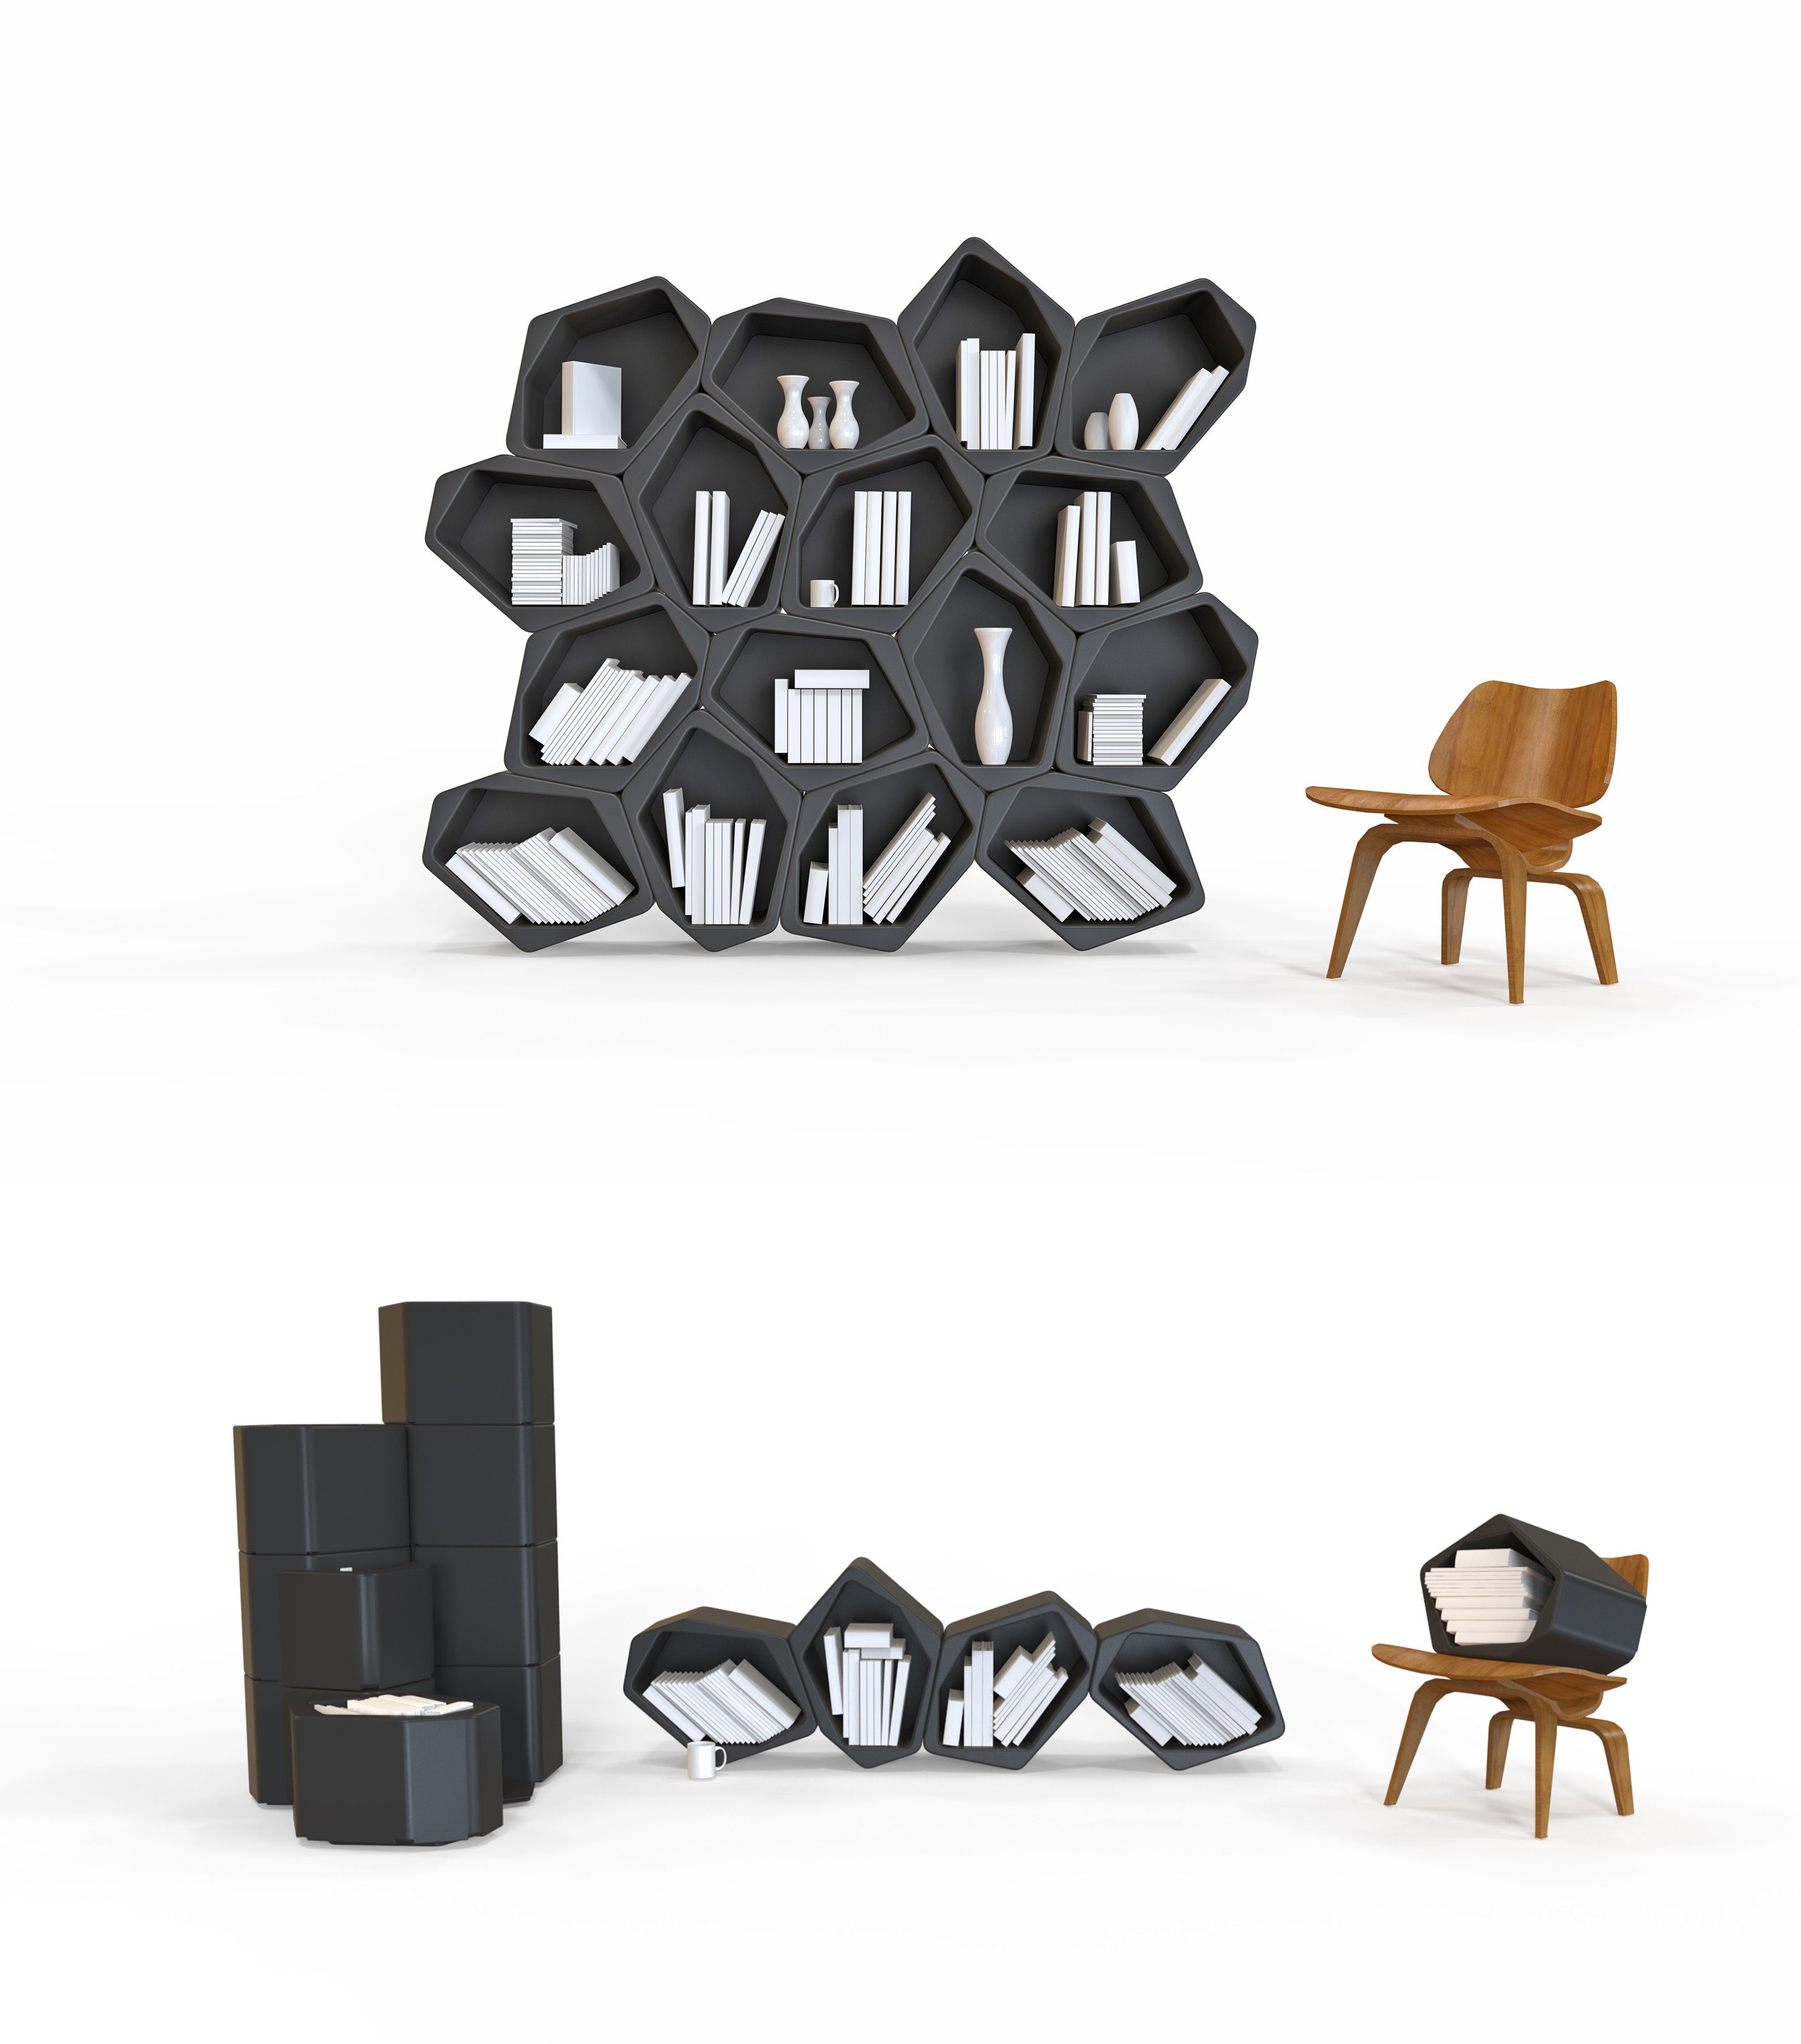 6-er Hängeregal Wandregal & Schwarz modular, Wabenregal recyclebar Set, BUILD 100% Modulares Regalsystem, MOVISI Bücherregal schadstofffrei